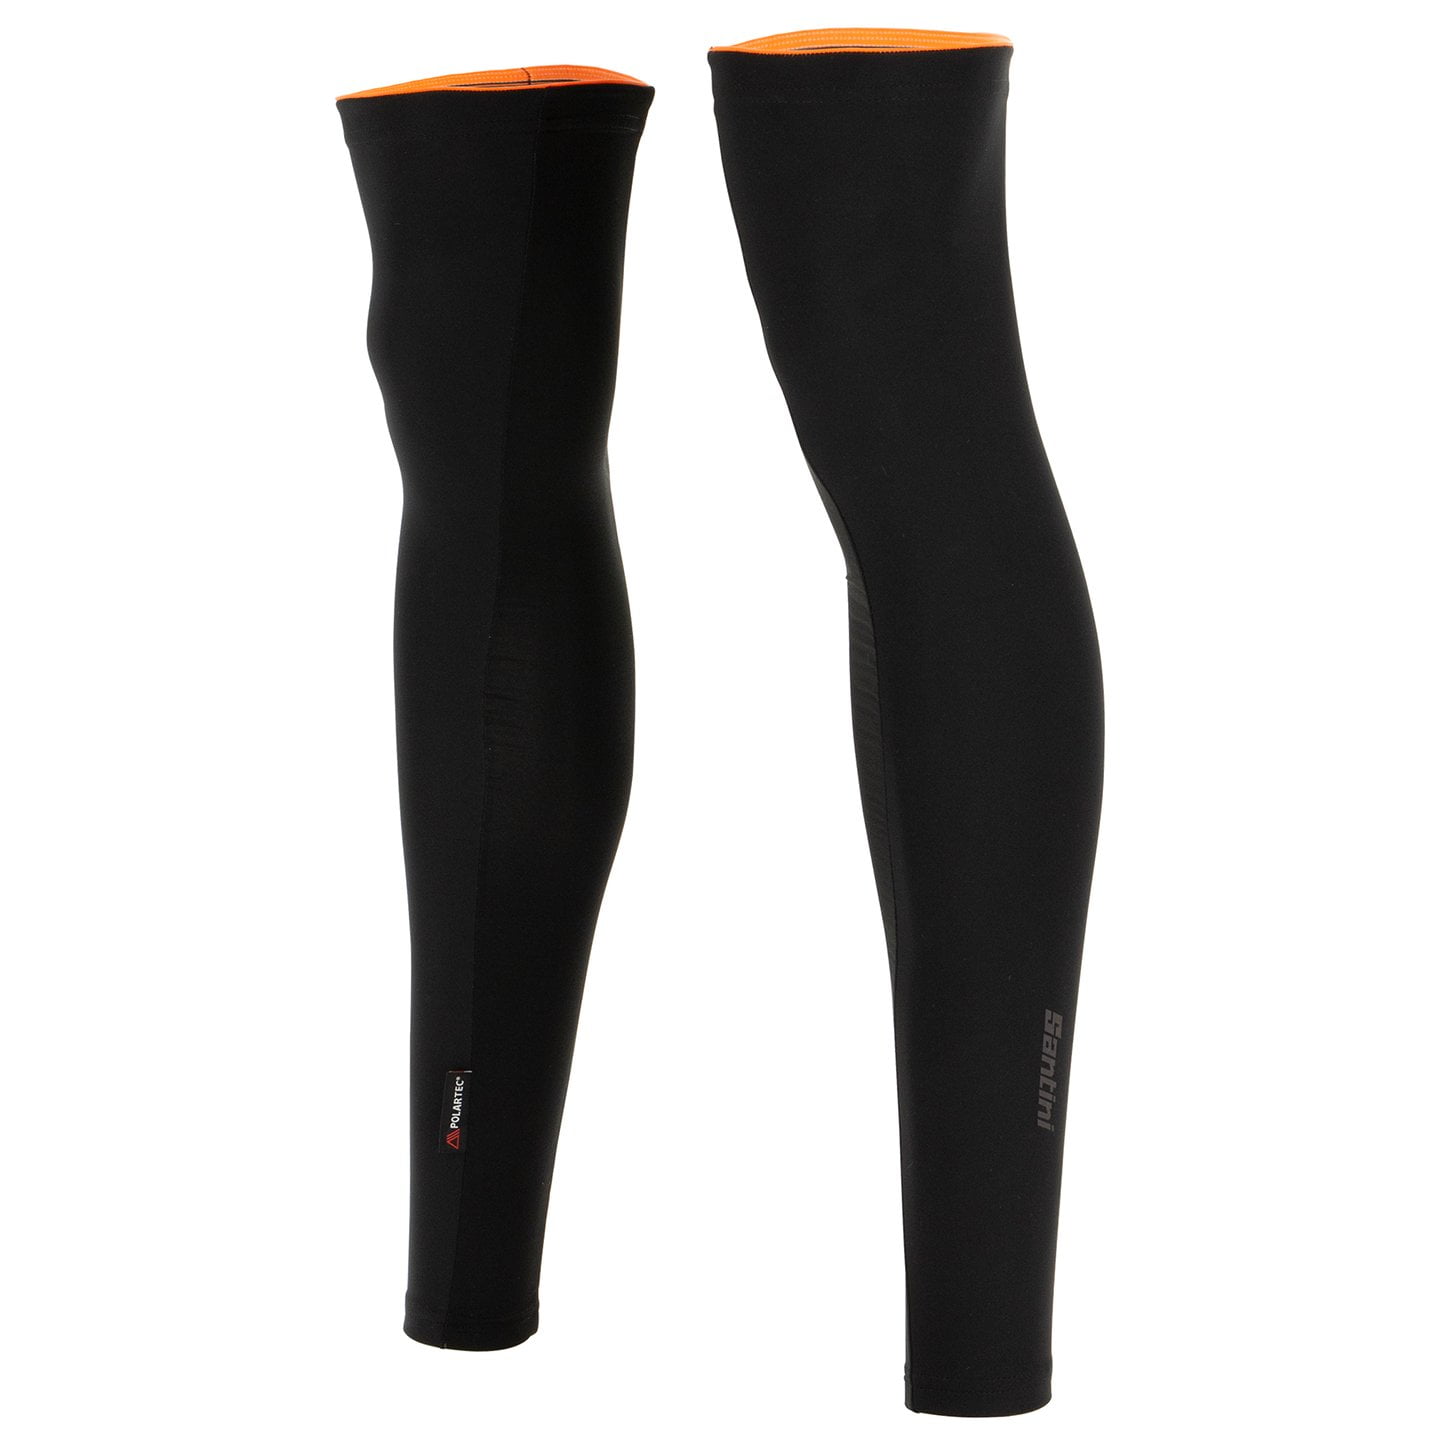 SANTINI Vega Multi Leg Warmers, for men, size XL, Cycle clothing